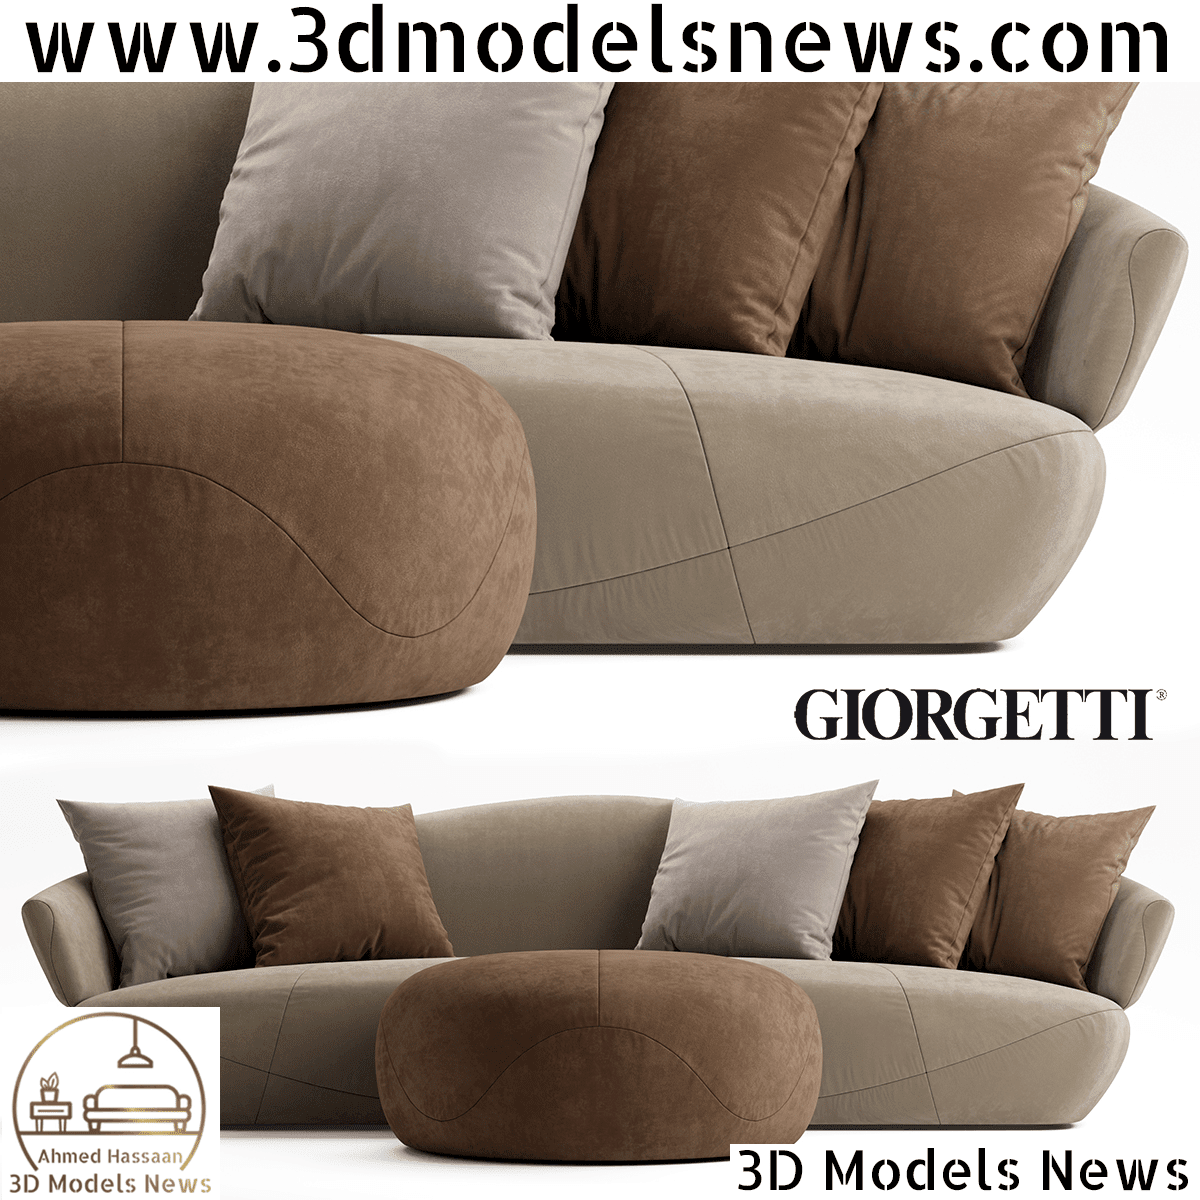 Giorgetti solemyidae sofa model classic style